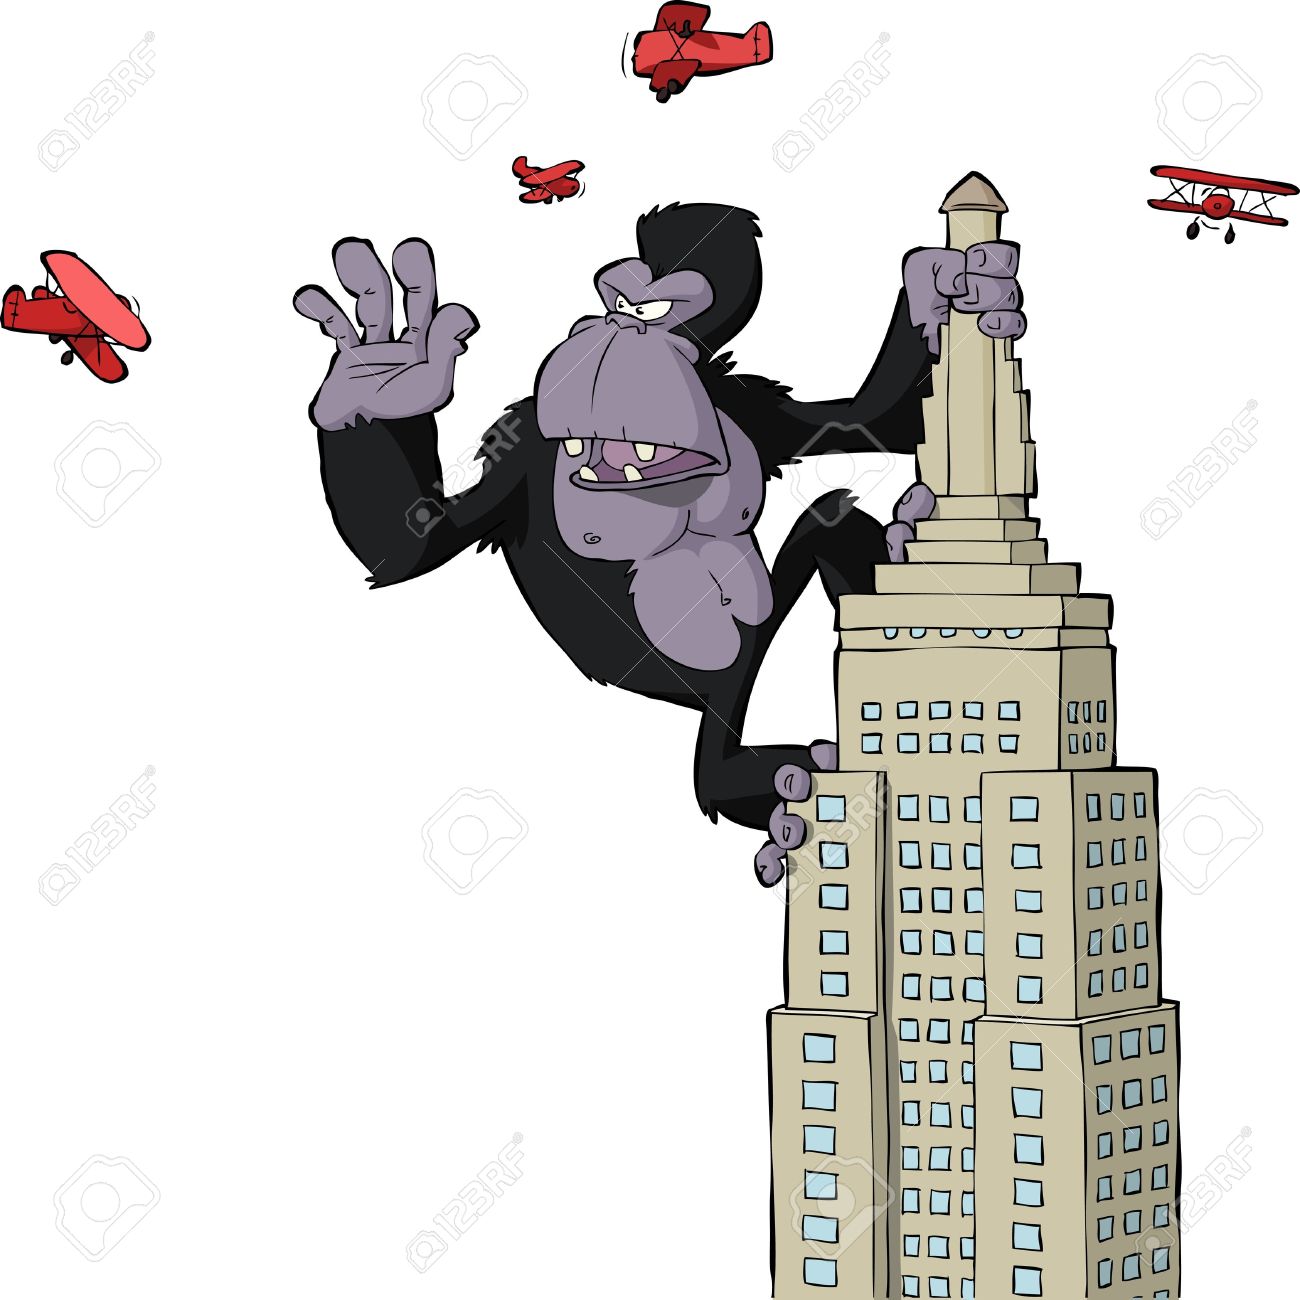 King Kong clipart #13, Download drawings